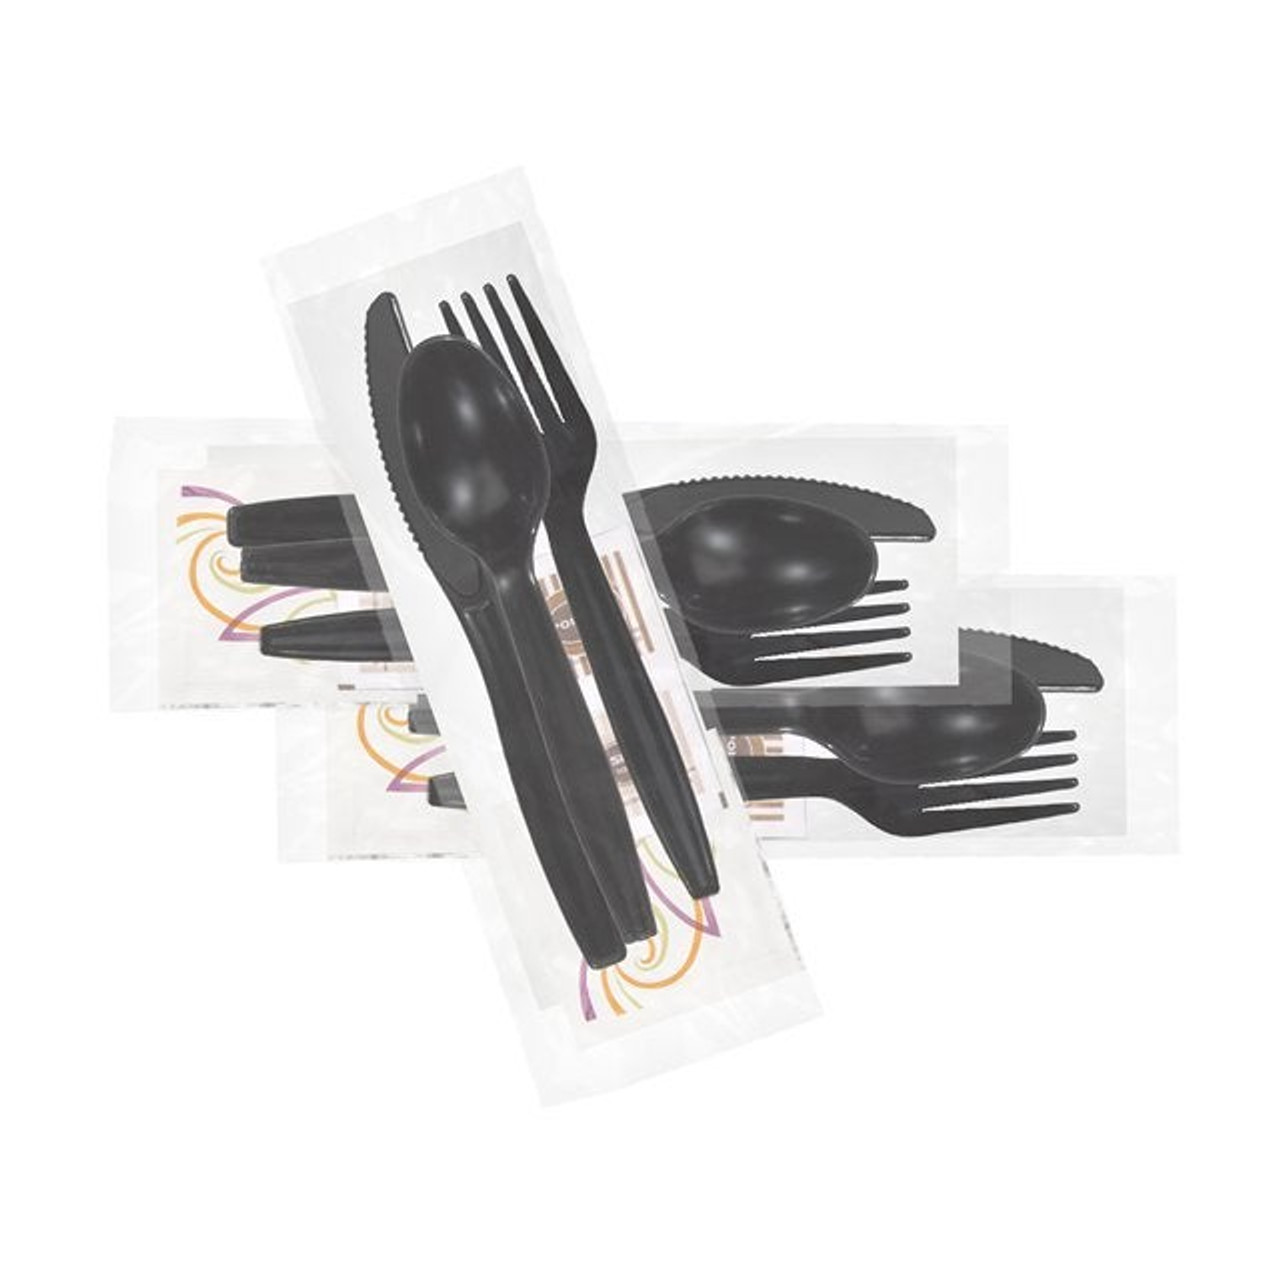 New England Cutlery 7-Piece Cutlery Set Black